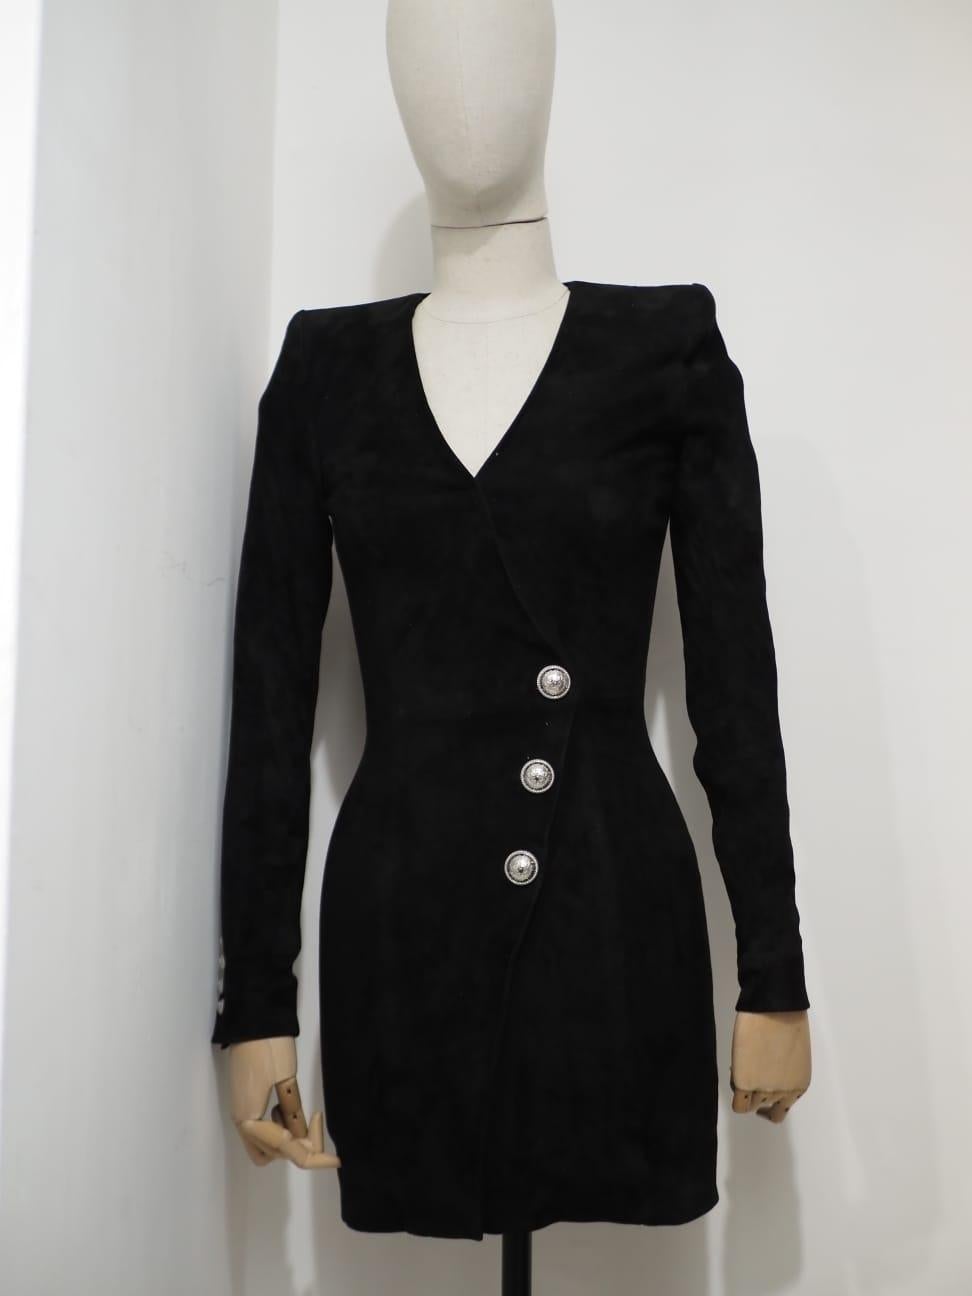 Balmain black suede silver tone buttons dress For Sale 1